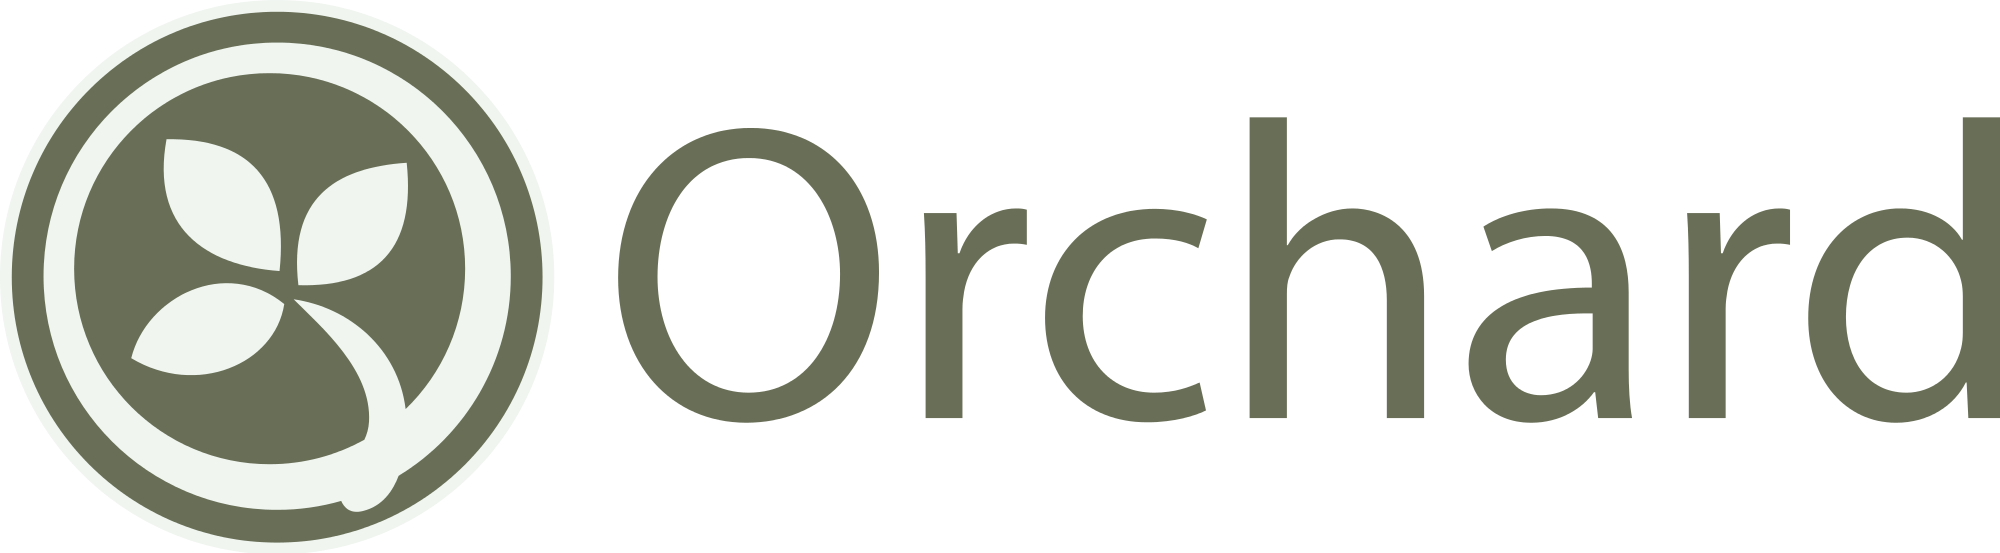 Orchard Logo - Orchard logo 1.svg